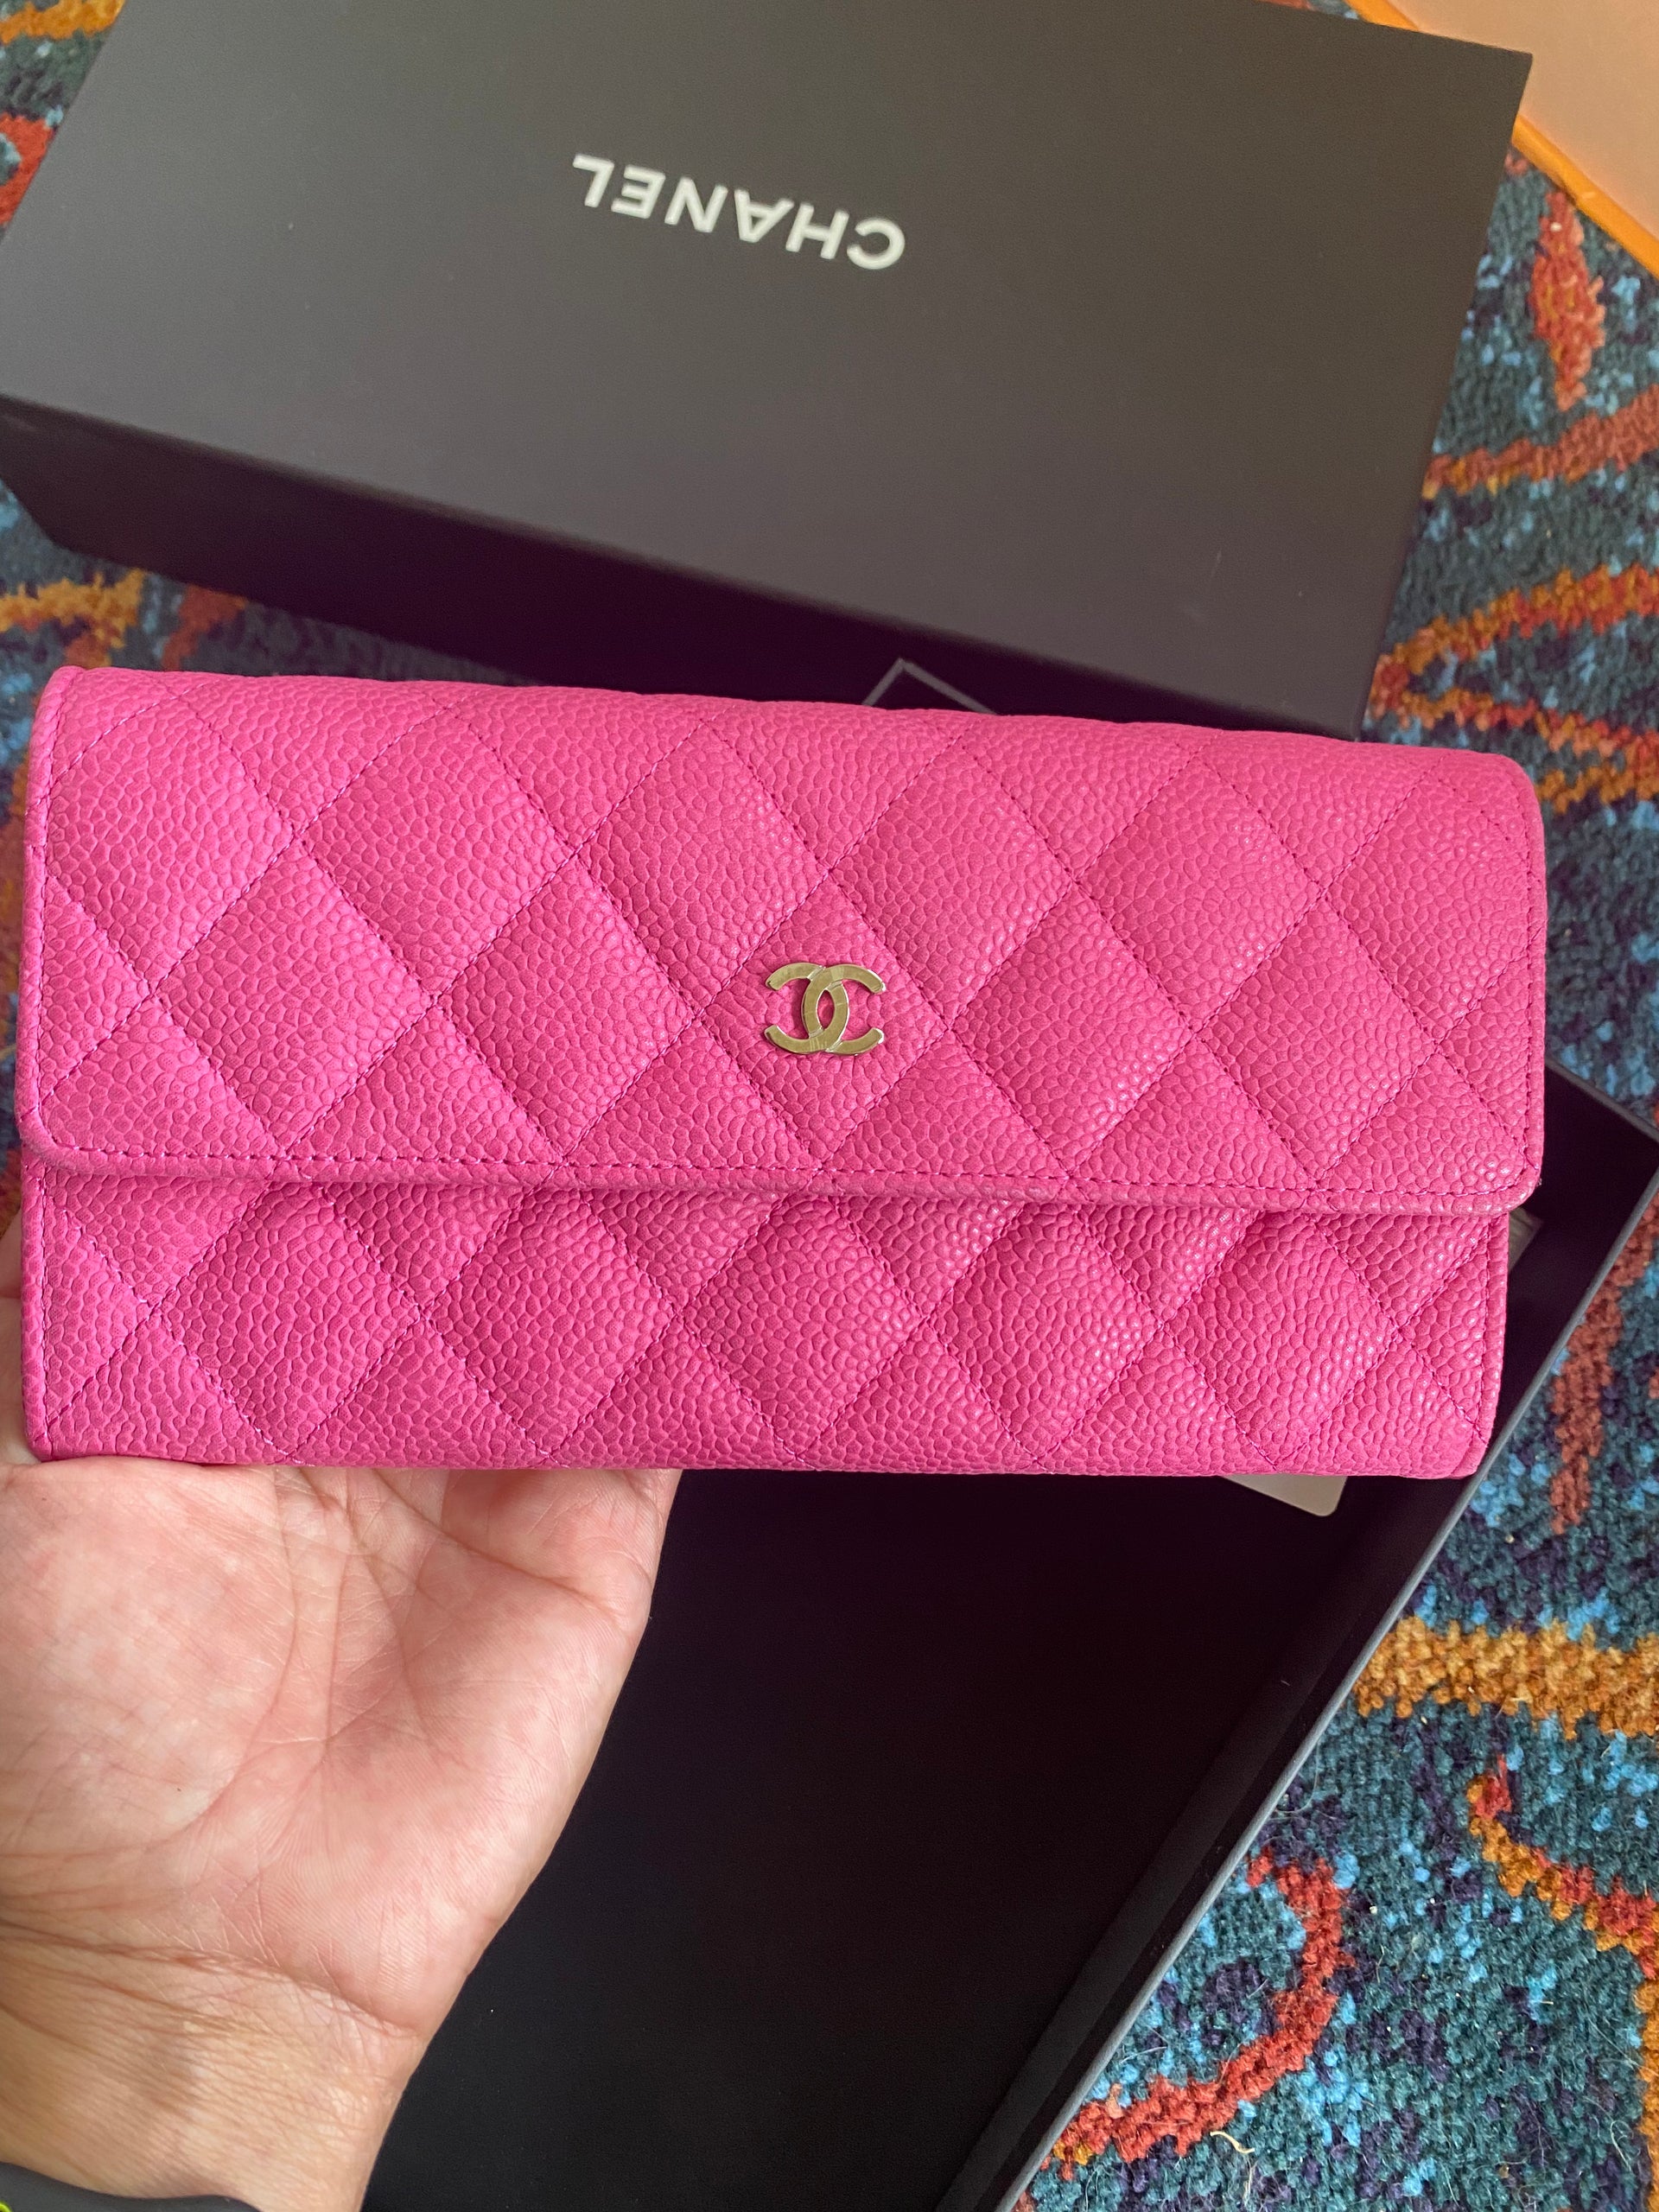 Chanel bifold wallet